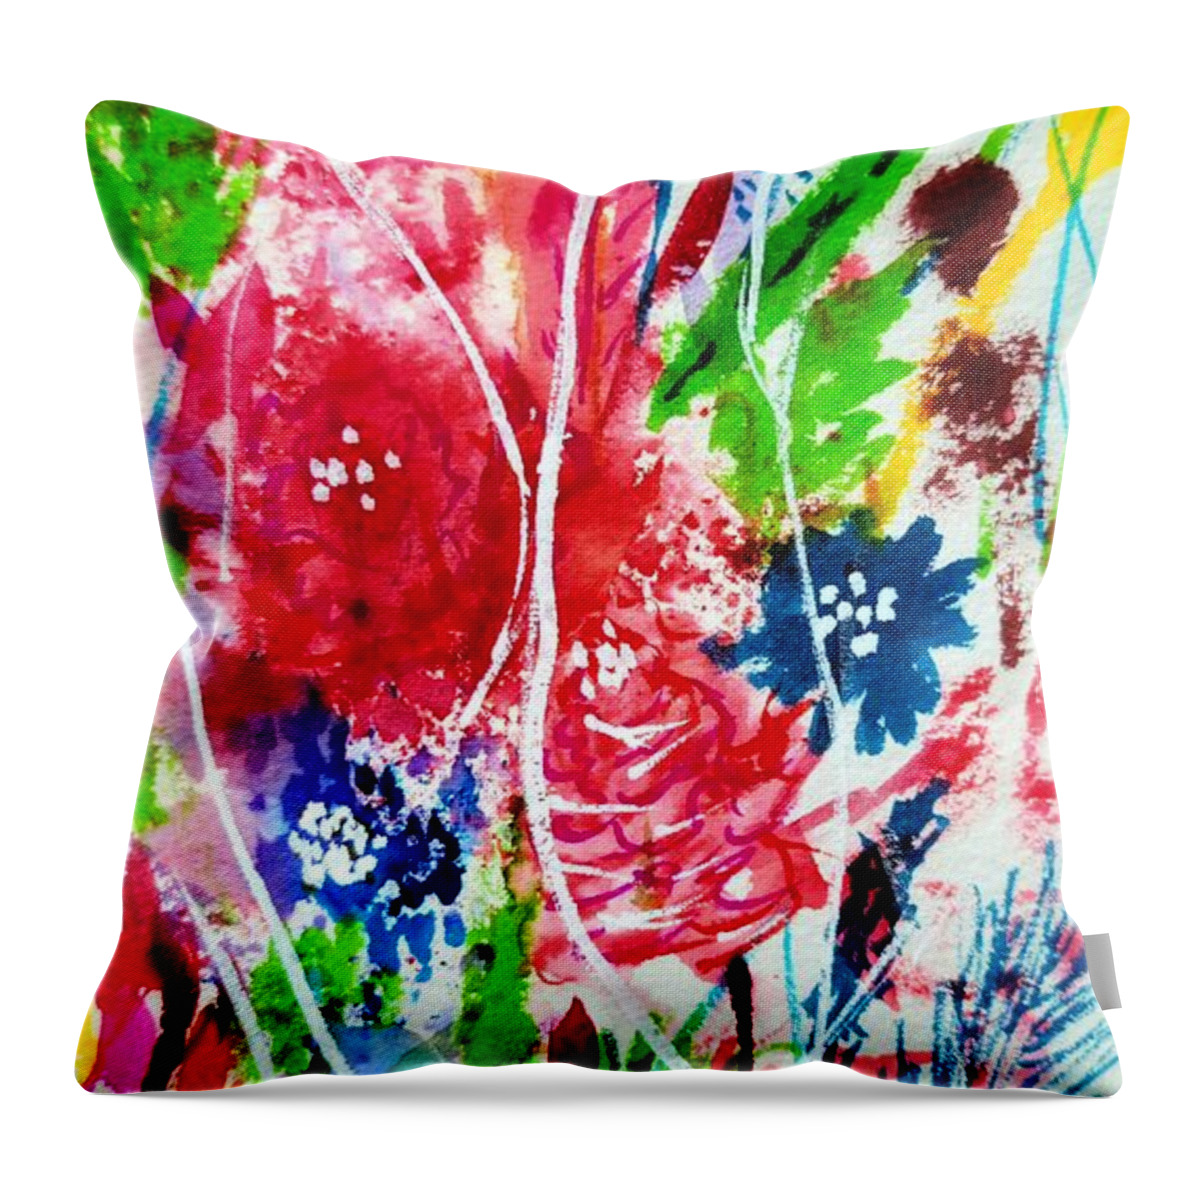 Flower Throw Pillow featuring the painting Flower Garden by Shady Lane Studios-Karen Howard